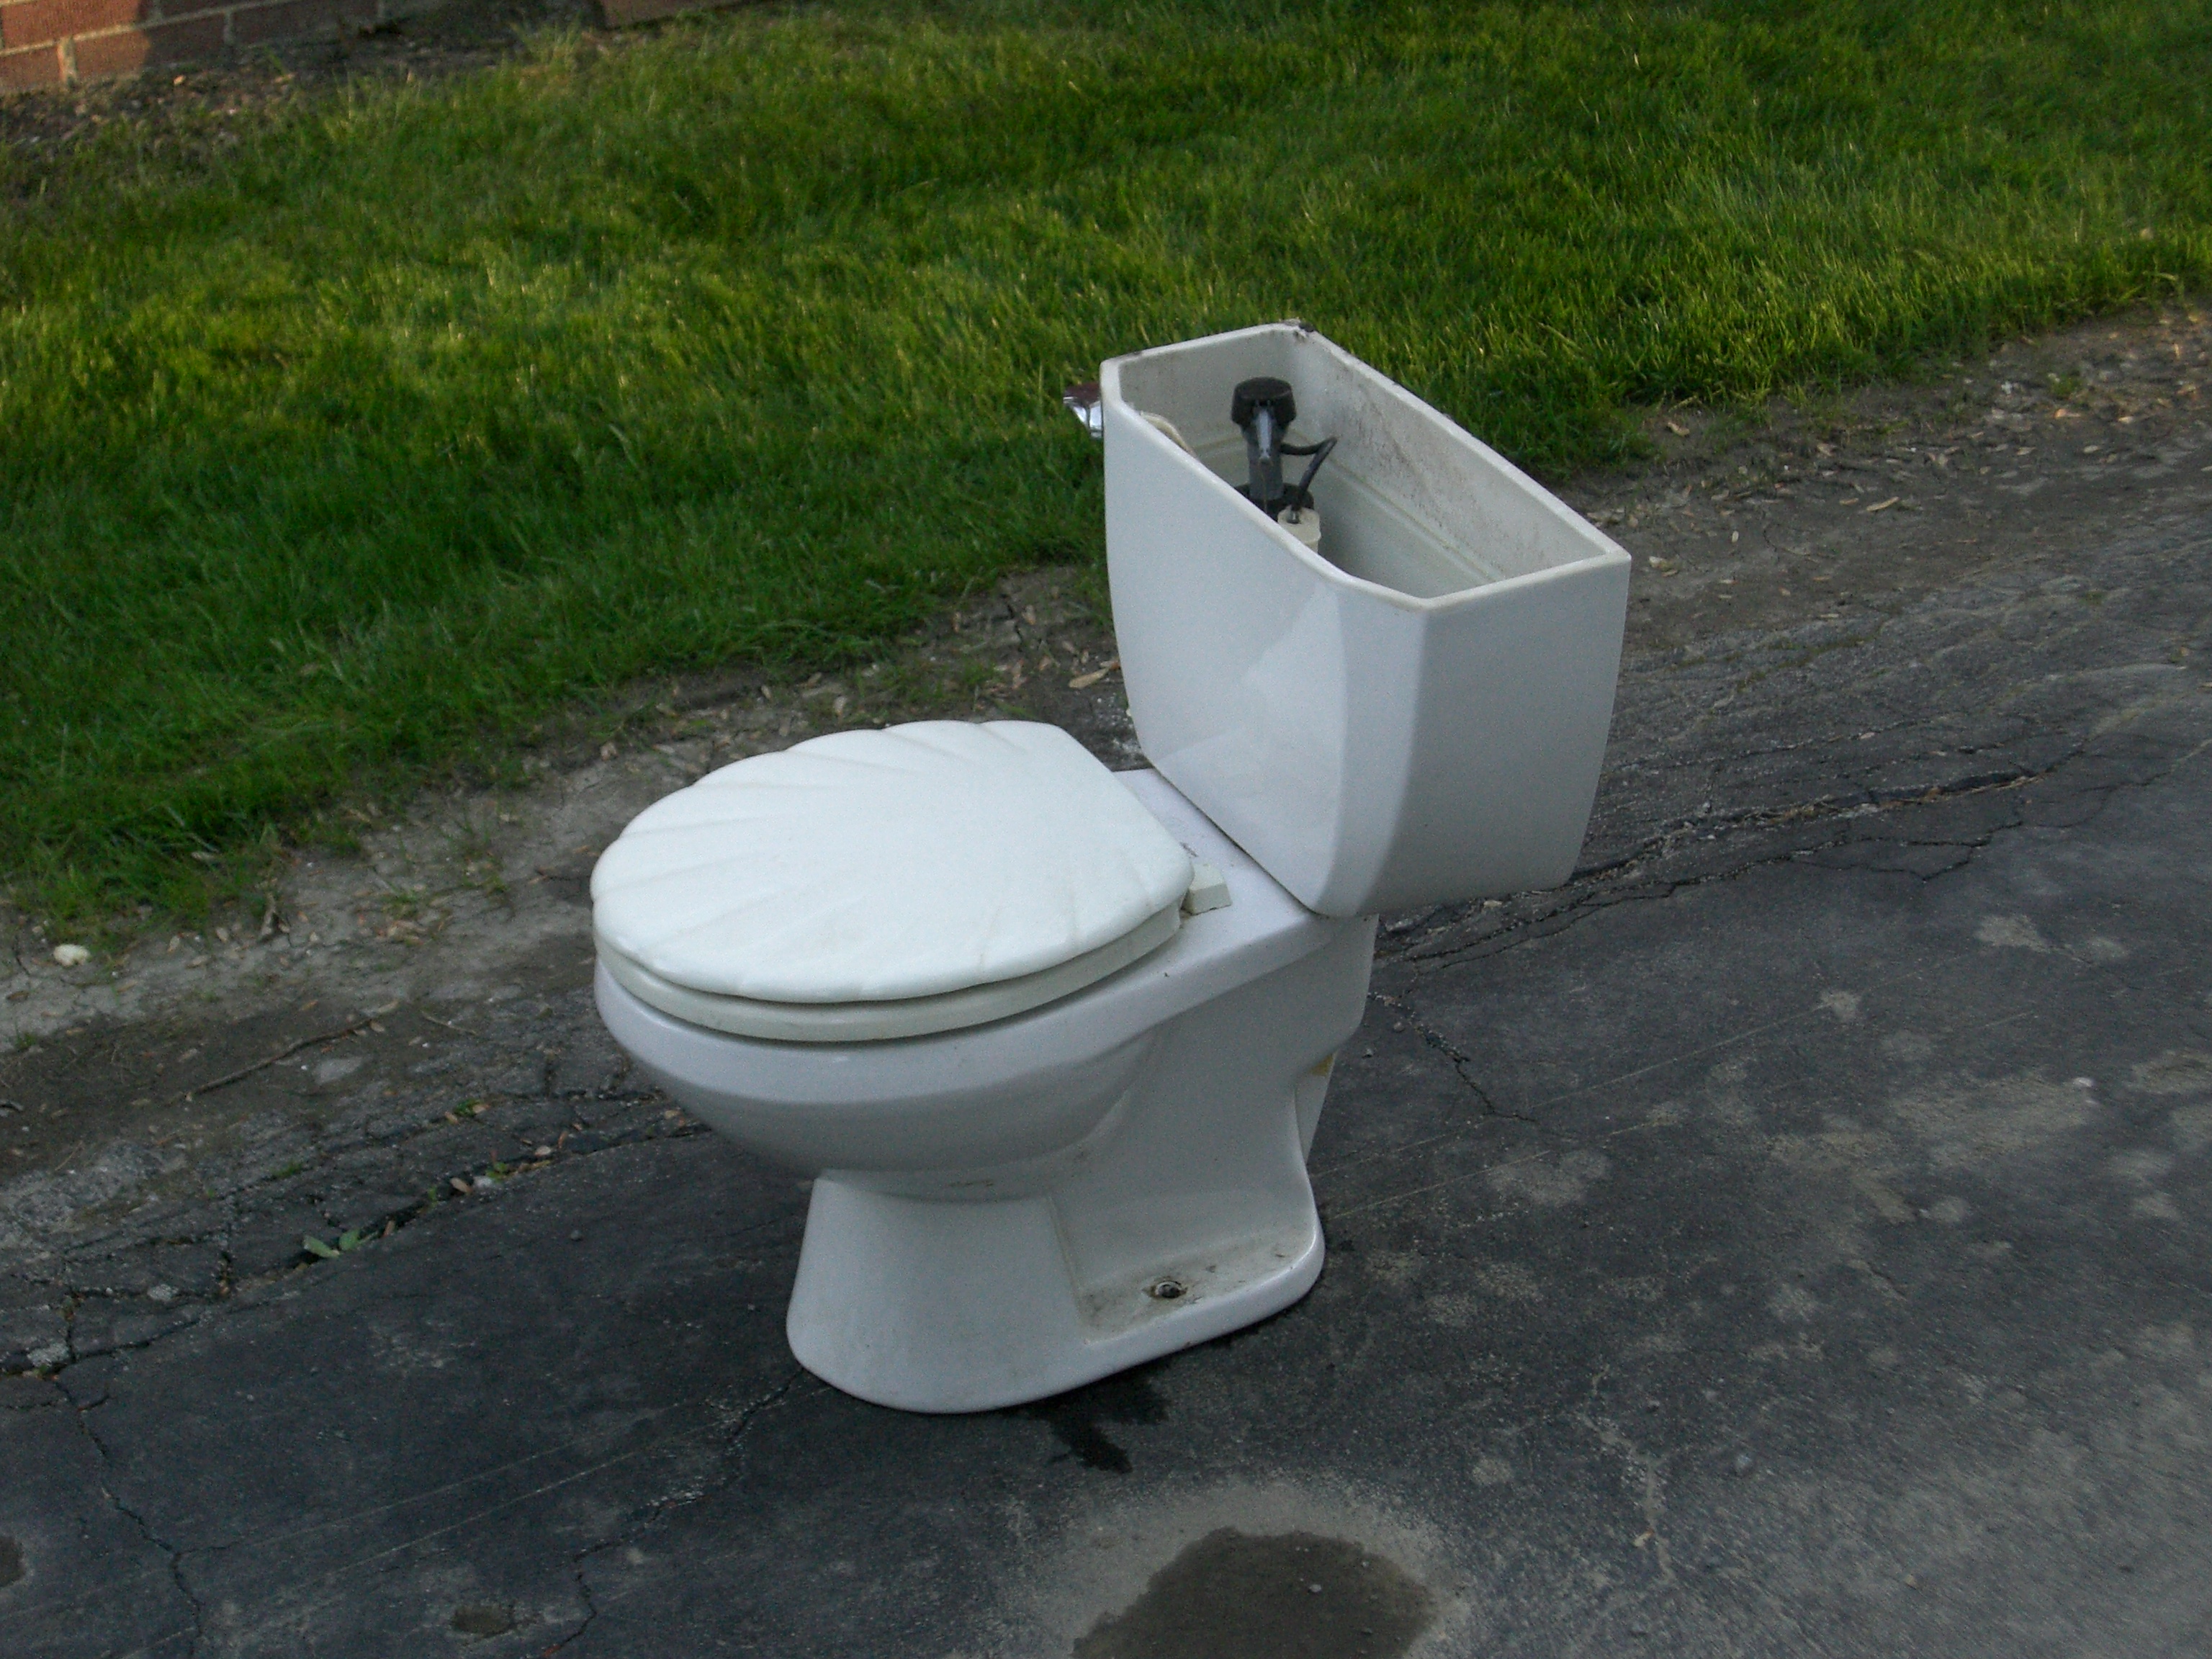 Goodbye, old toilet. We will miss you. at blog.nickserra.com